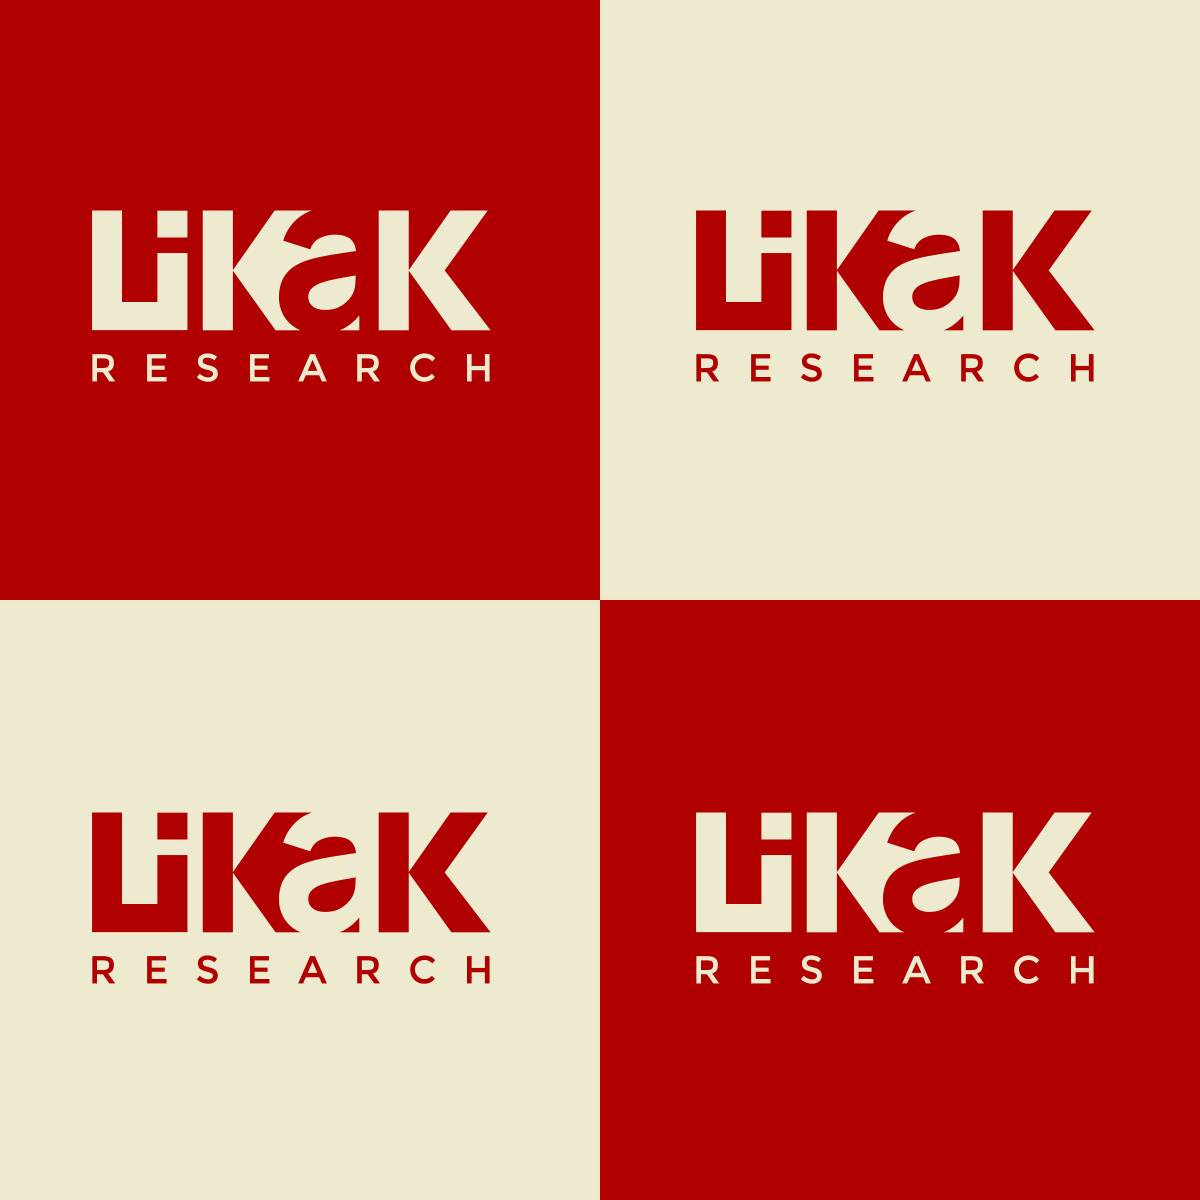 Likak Research - réalisation du logo